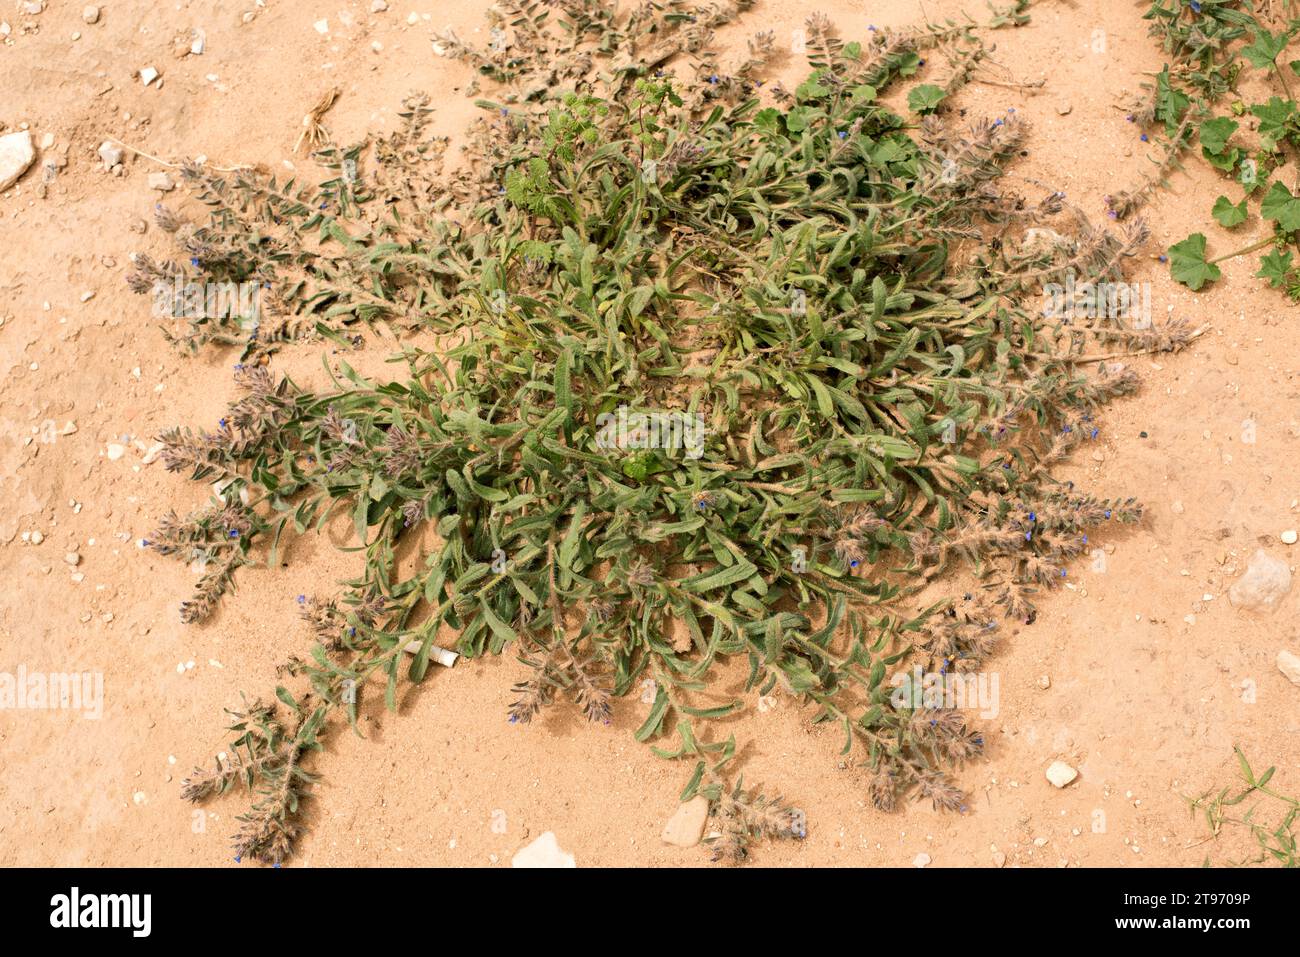 Alkanet (Alkanna tinctoria), its roots are used as a red dye. Wadi Rum Desert, Jordan. Stock Photo